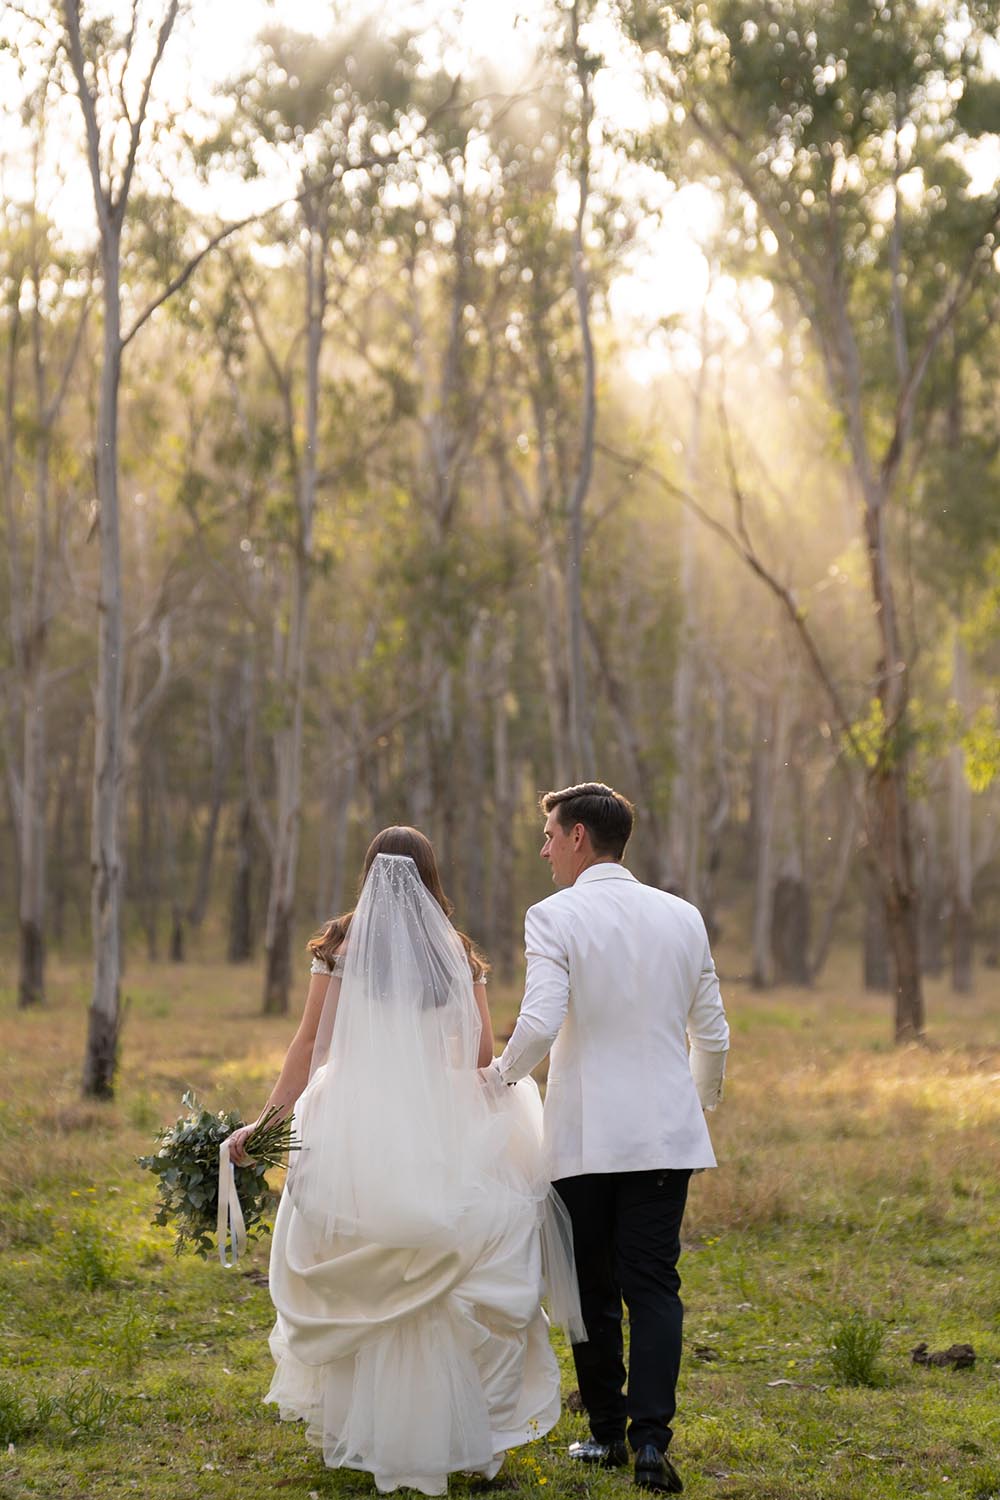 Wedding Photography - Bride and Groom walking